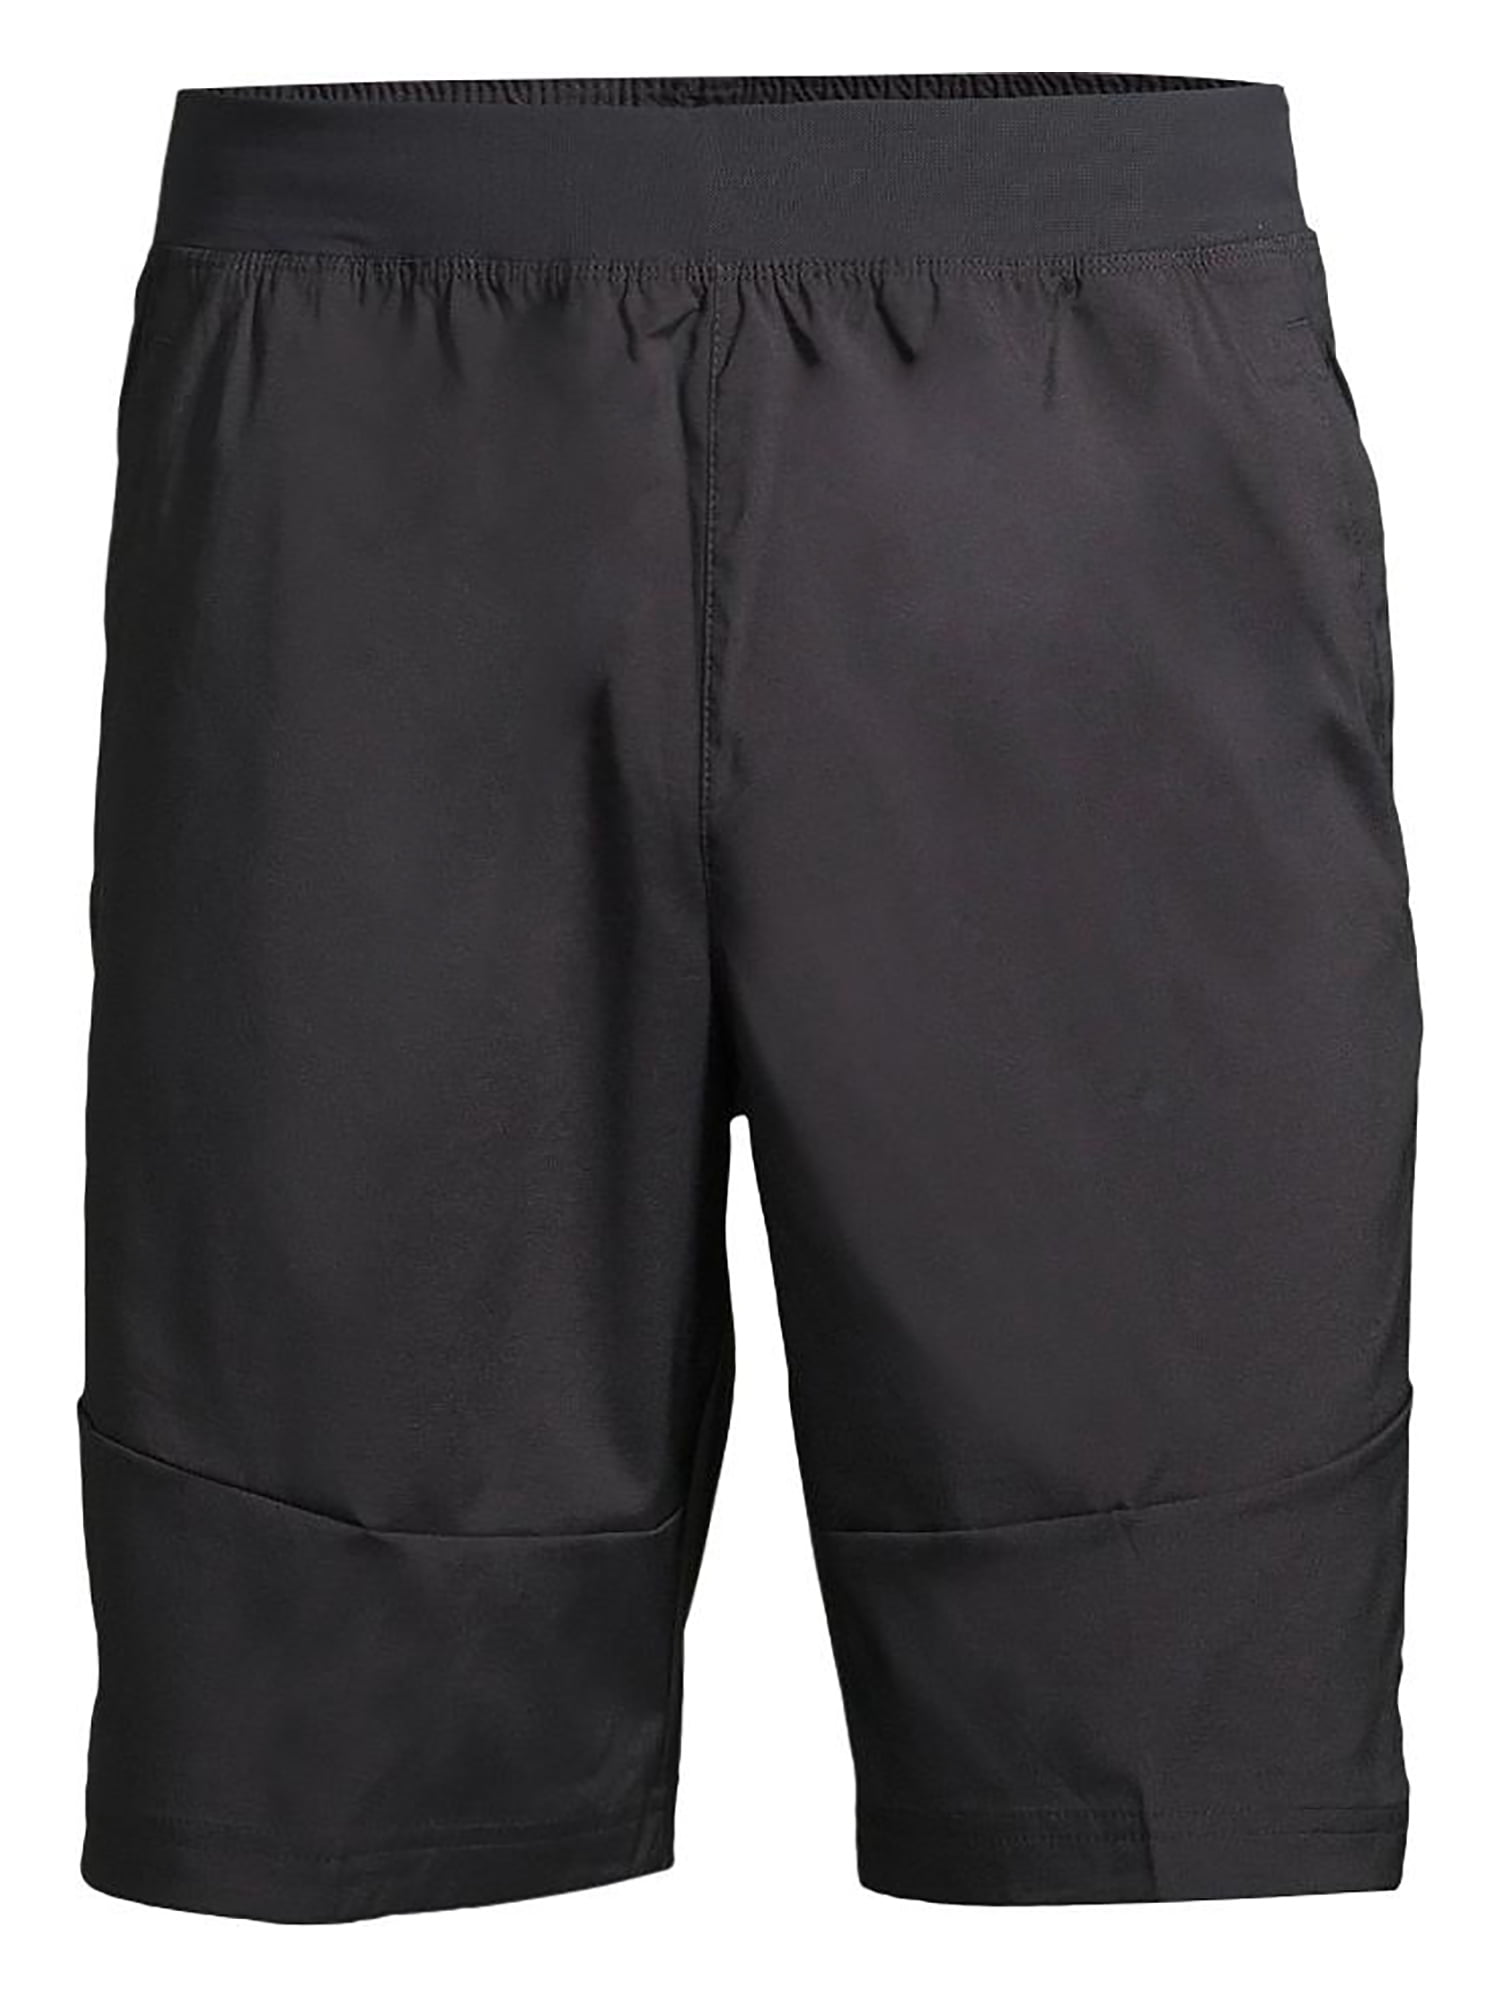 Buy Apana men 7 inseam drawstring plain training shorts black